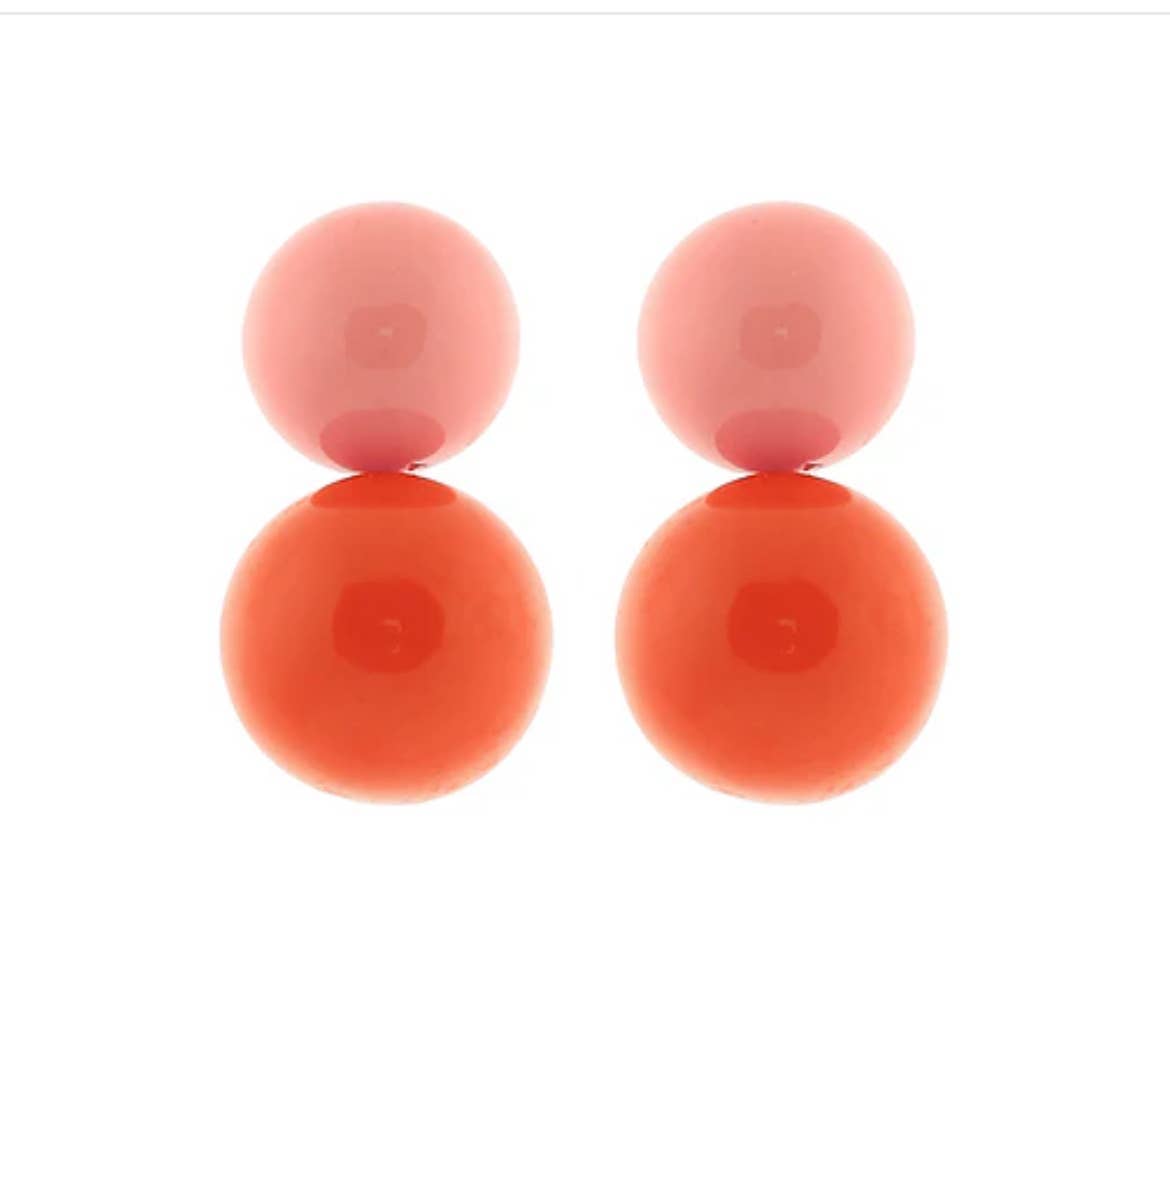 Bubble Gum Baubles Earrings